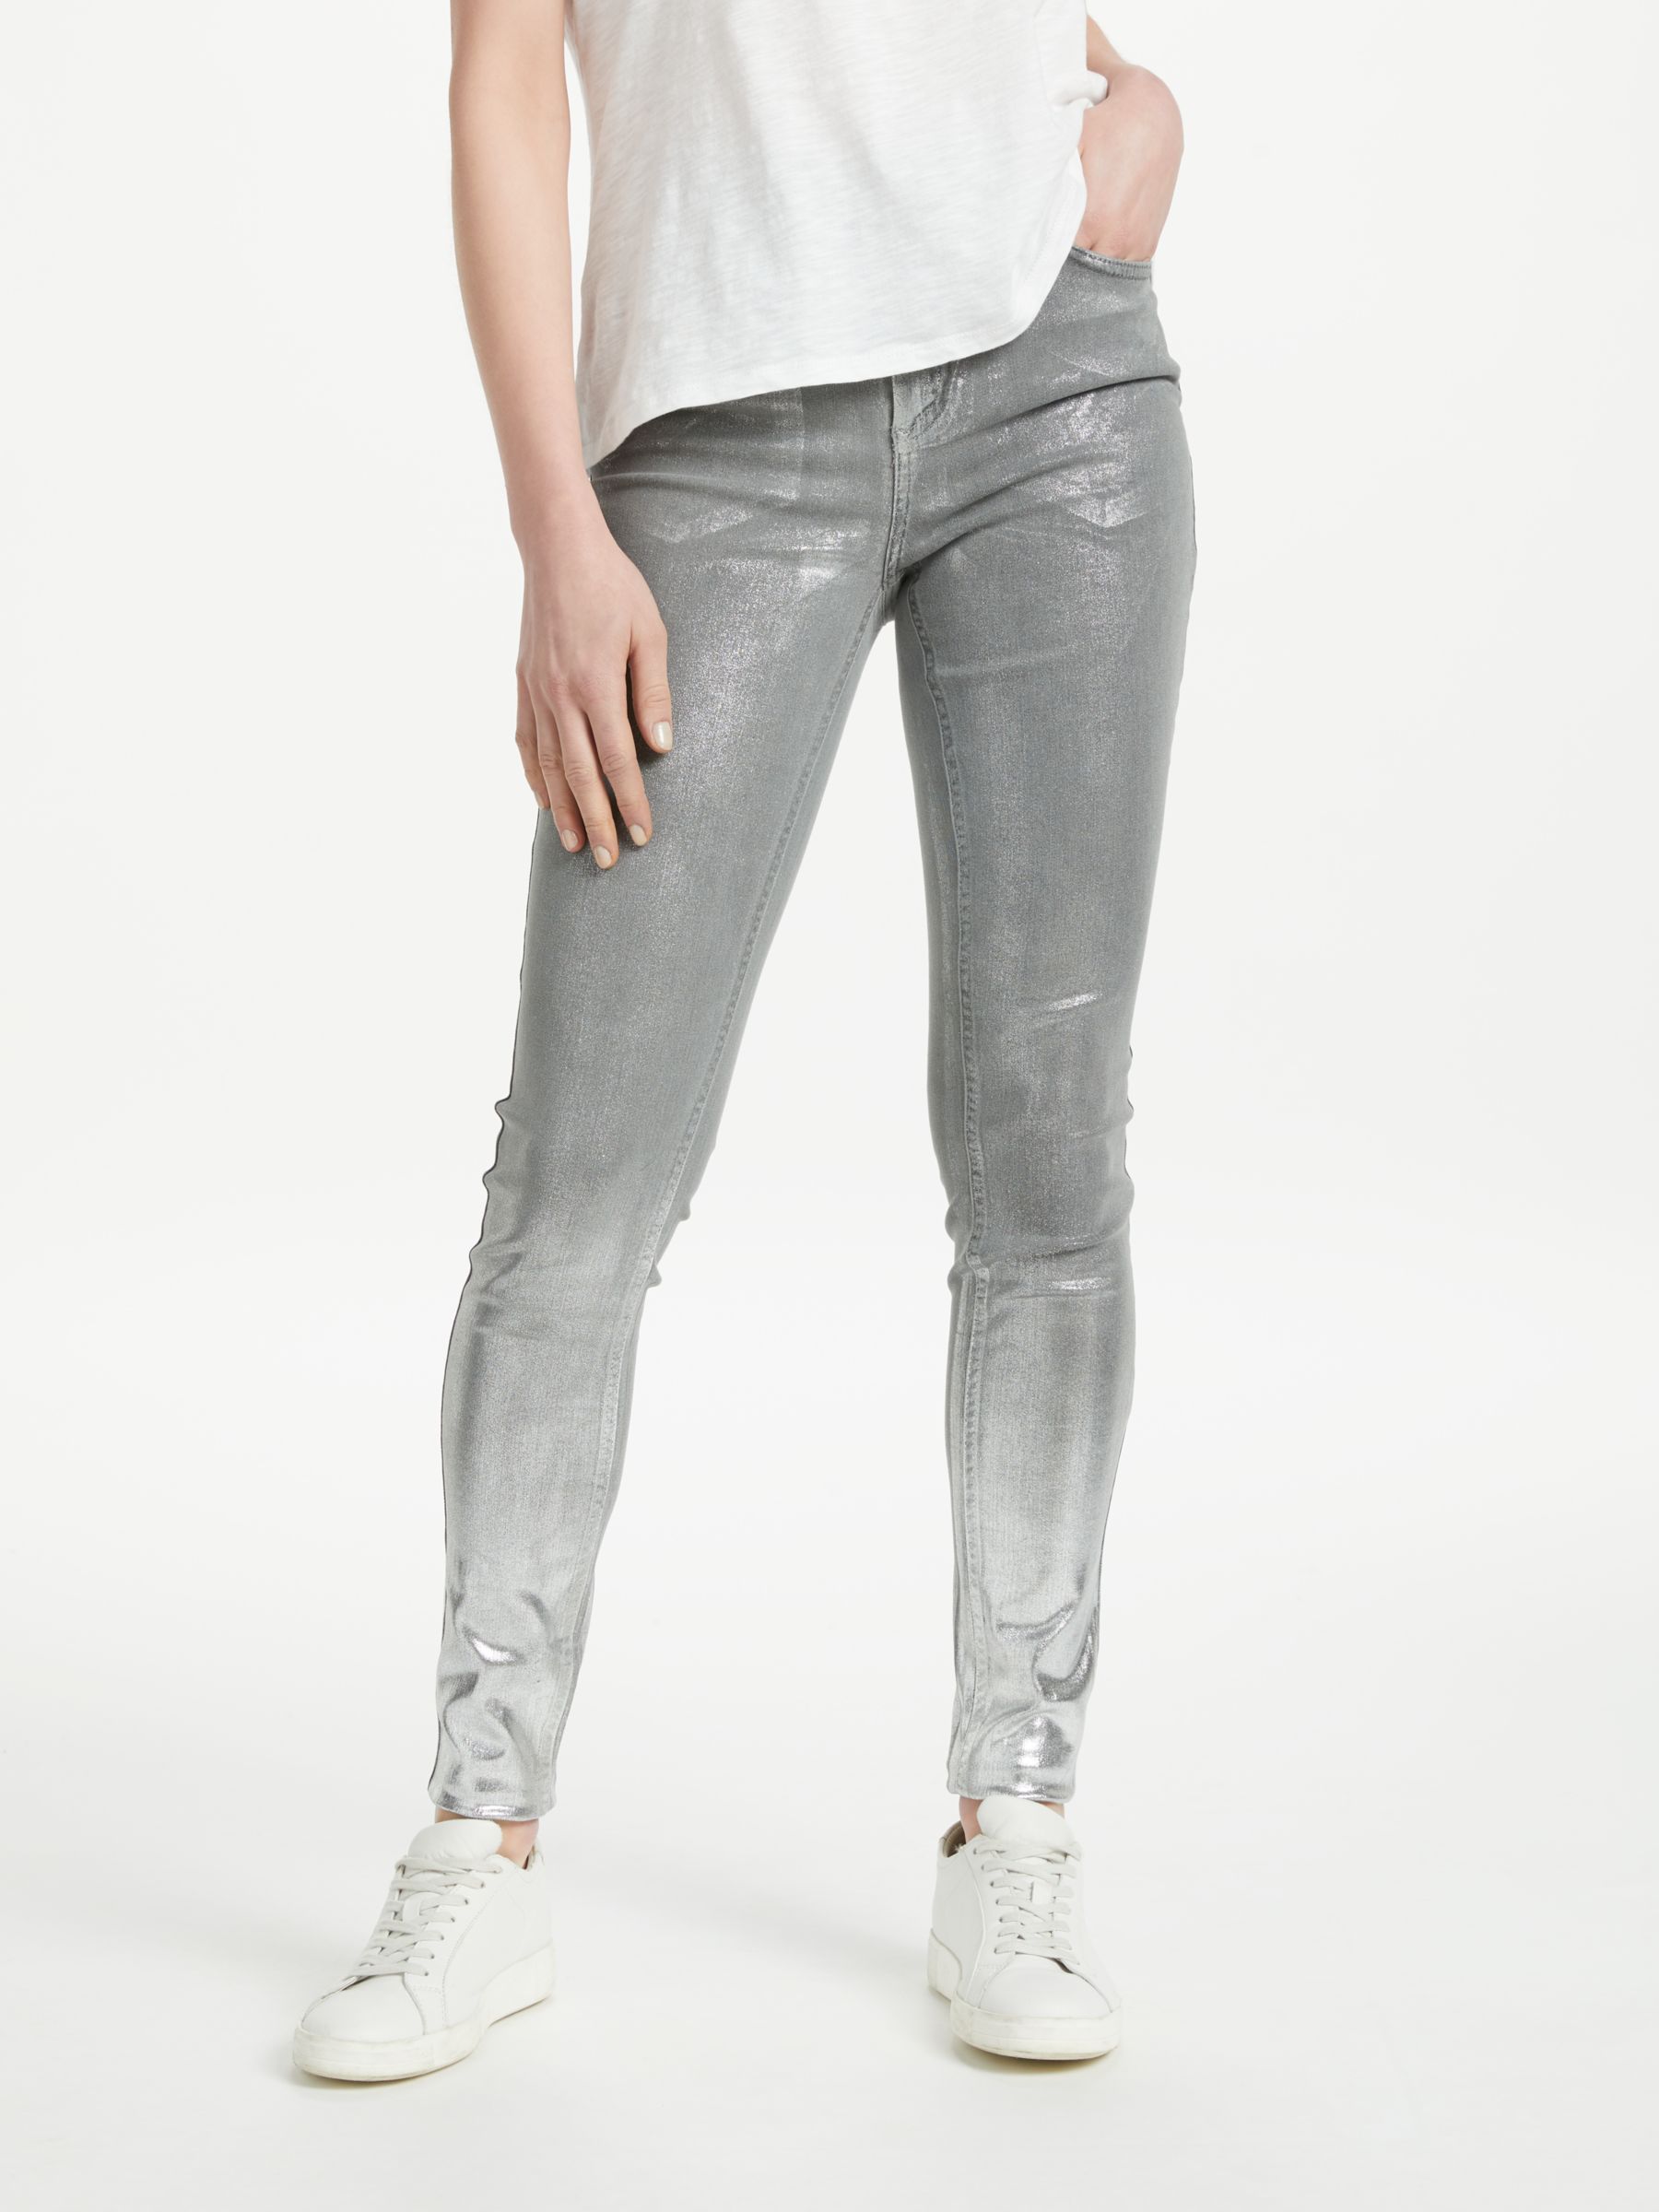 grey distressed skinny jeans